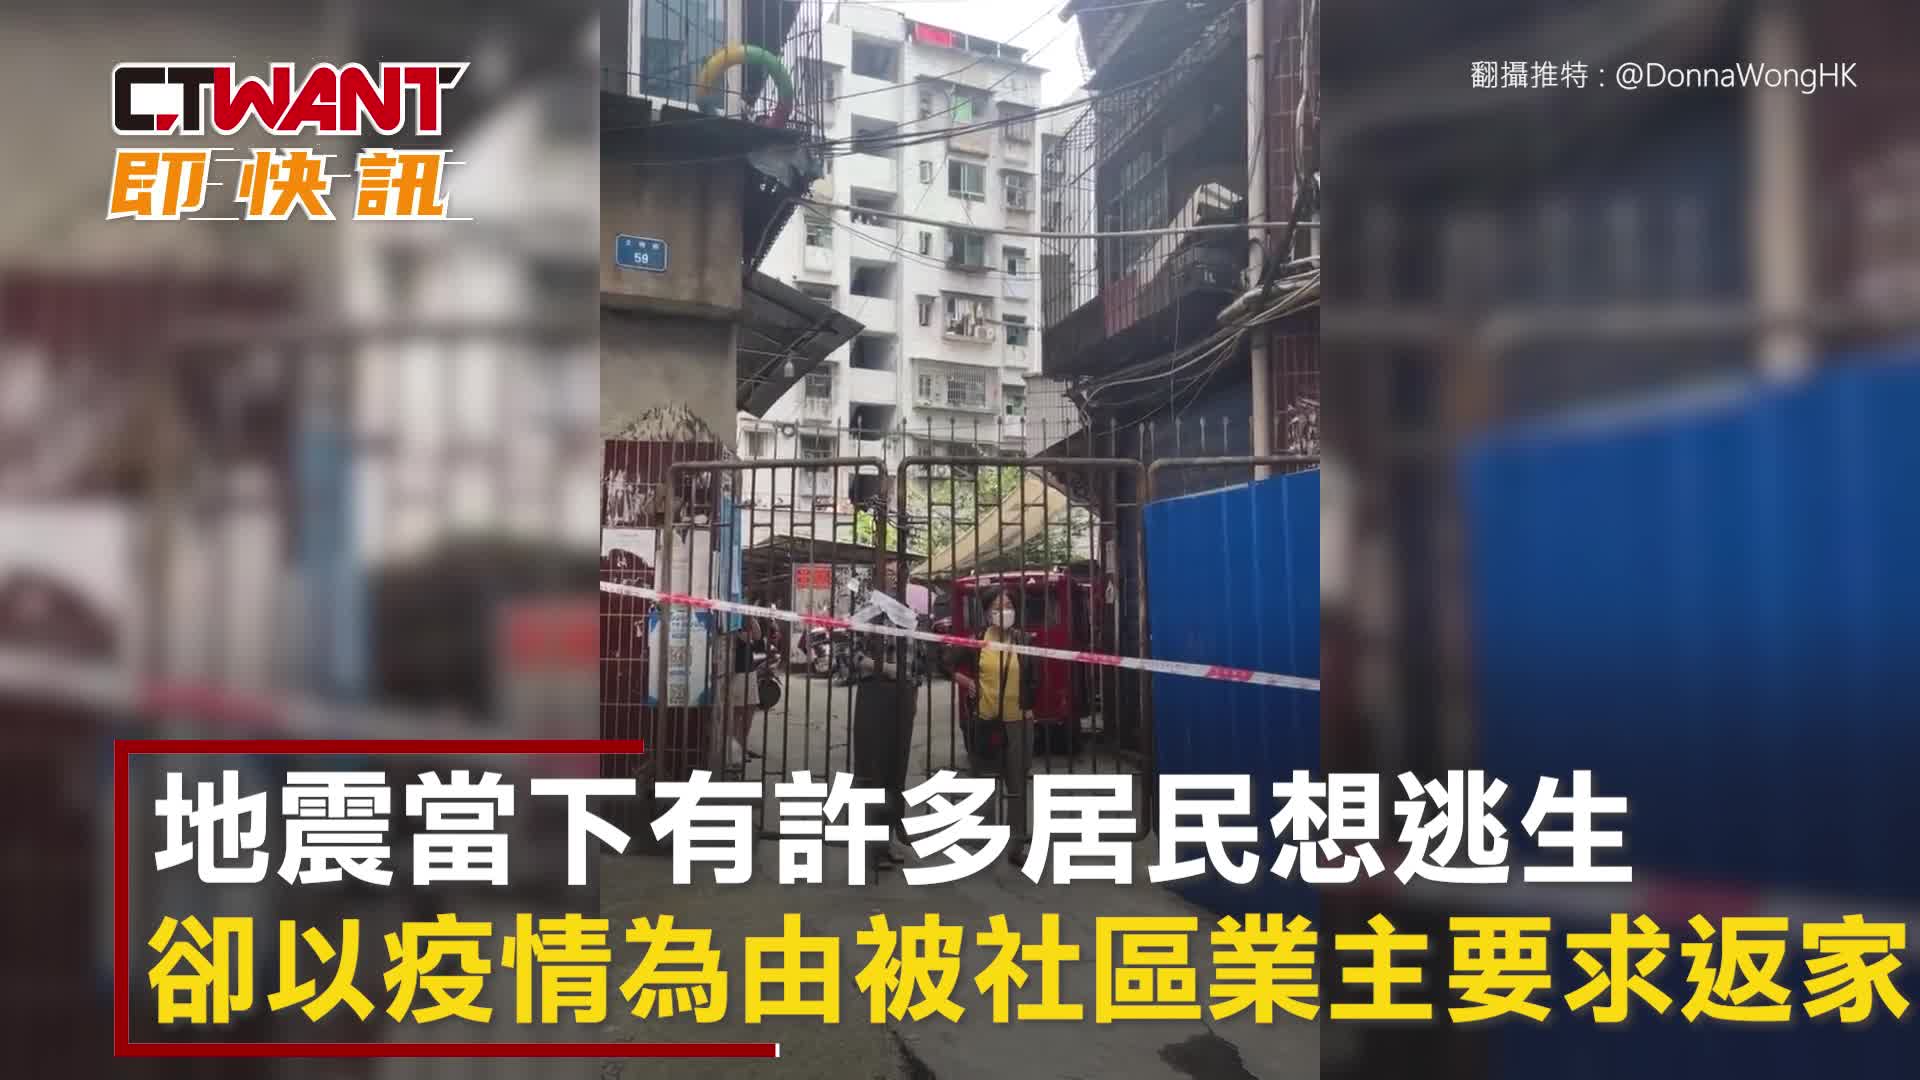 CTWANT 國際新聞 / 中國四川地震逃不了 律師提出質疑卻被毆打